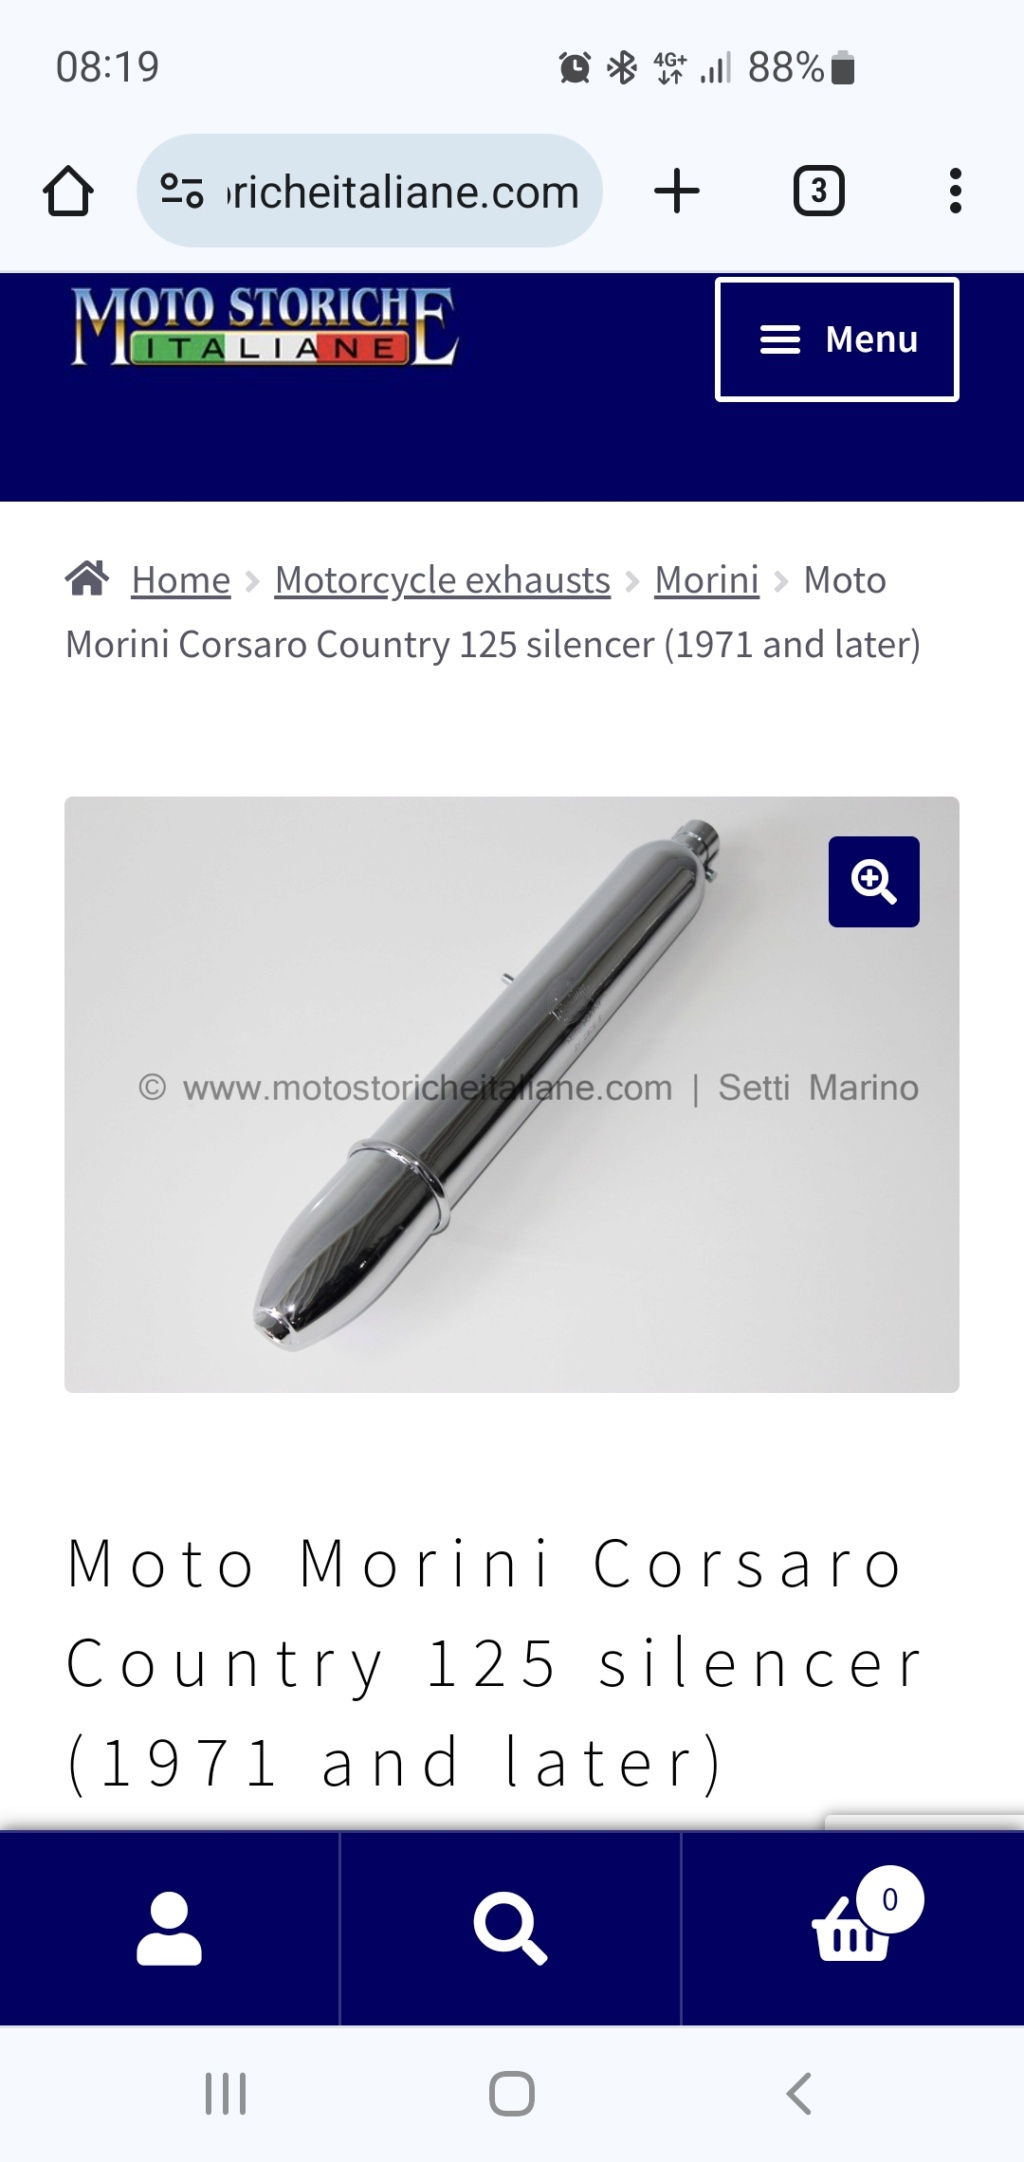 Moto Morini country corsaro 125 à vendre - mais à quel prix !? Screen52